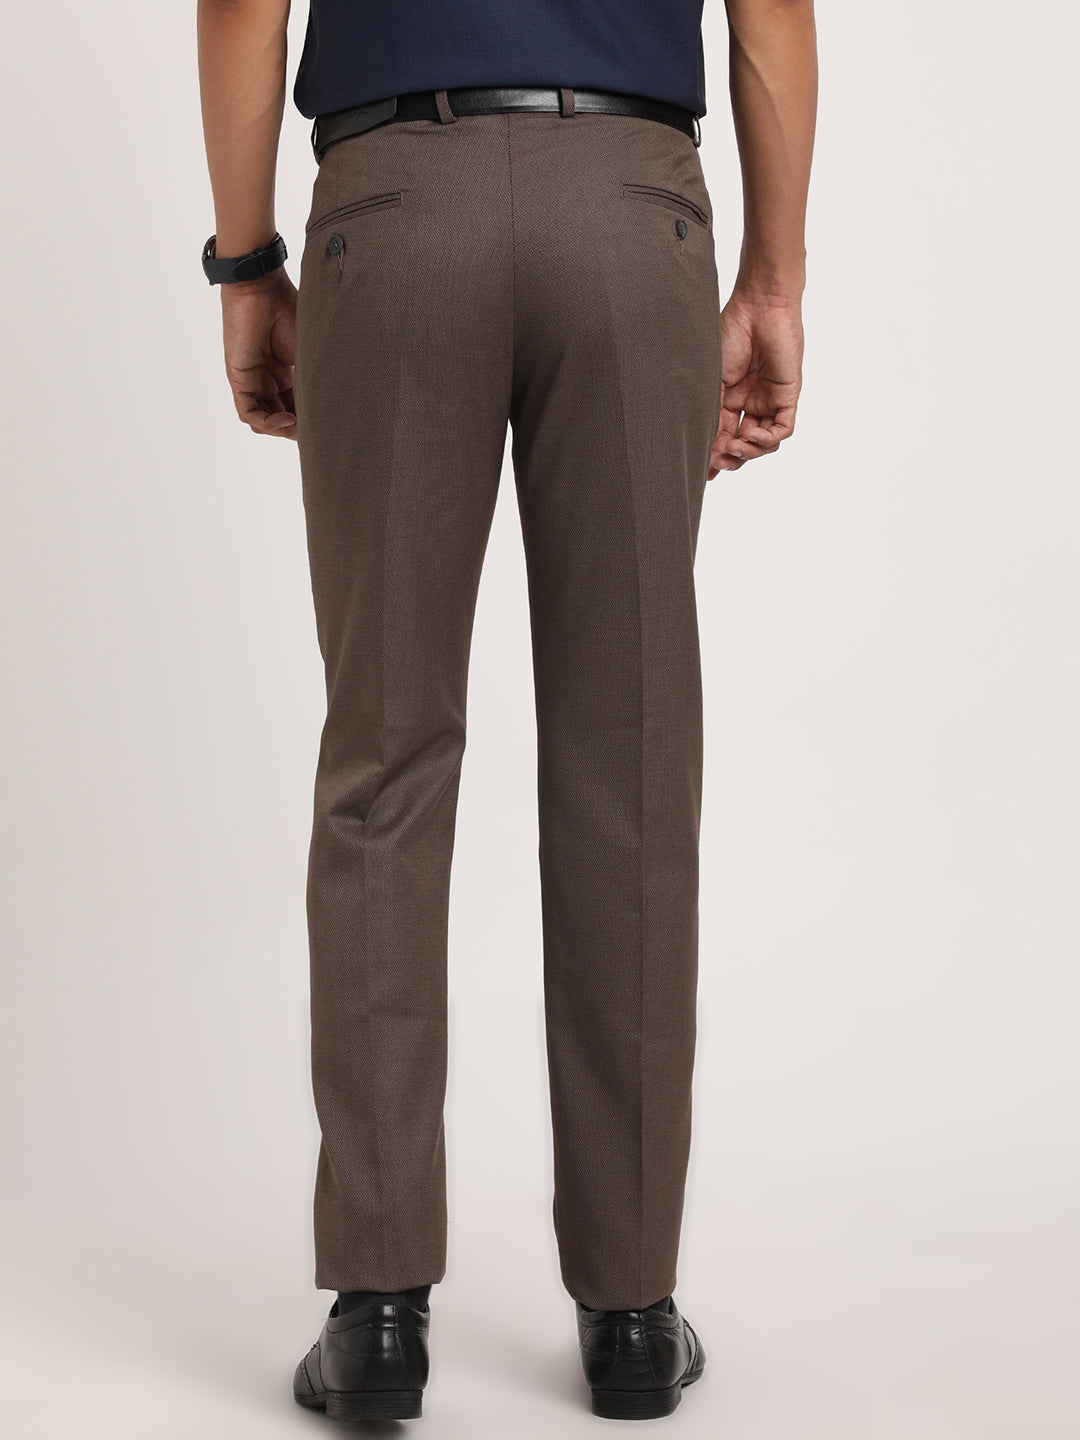 Buy Van Galis Fashion Light Brown Formal Trousers for Men at Amazon.in